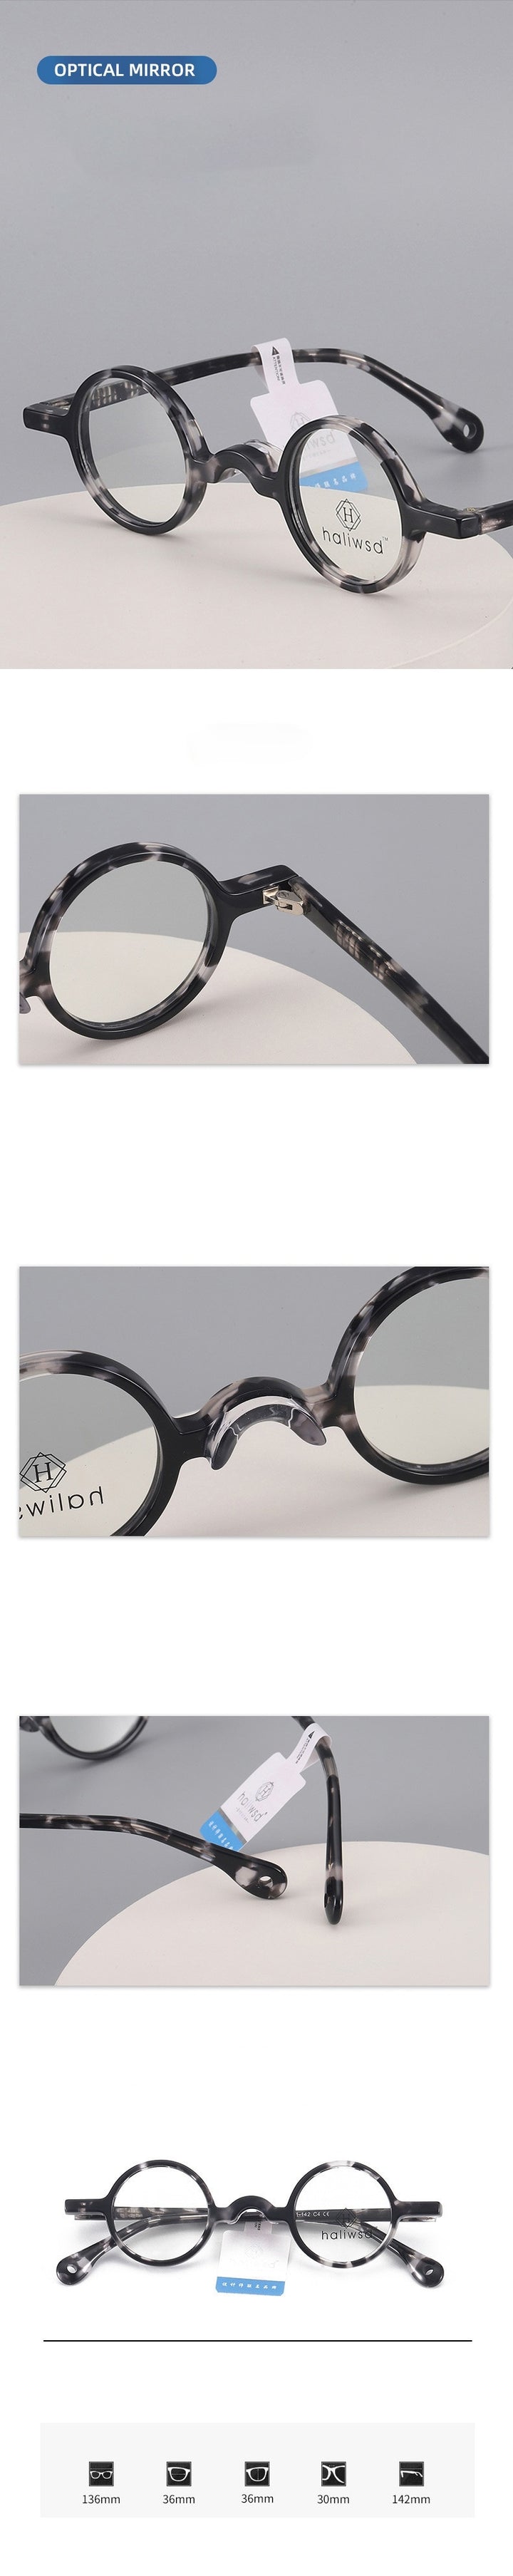 Cubojue Unisex Full Rim Small Round Acetate Hyperopic Reading Glasses Hlswd Reading Glasses Cubojue   